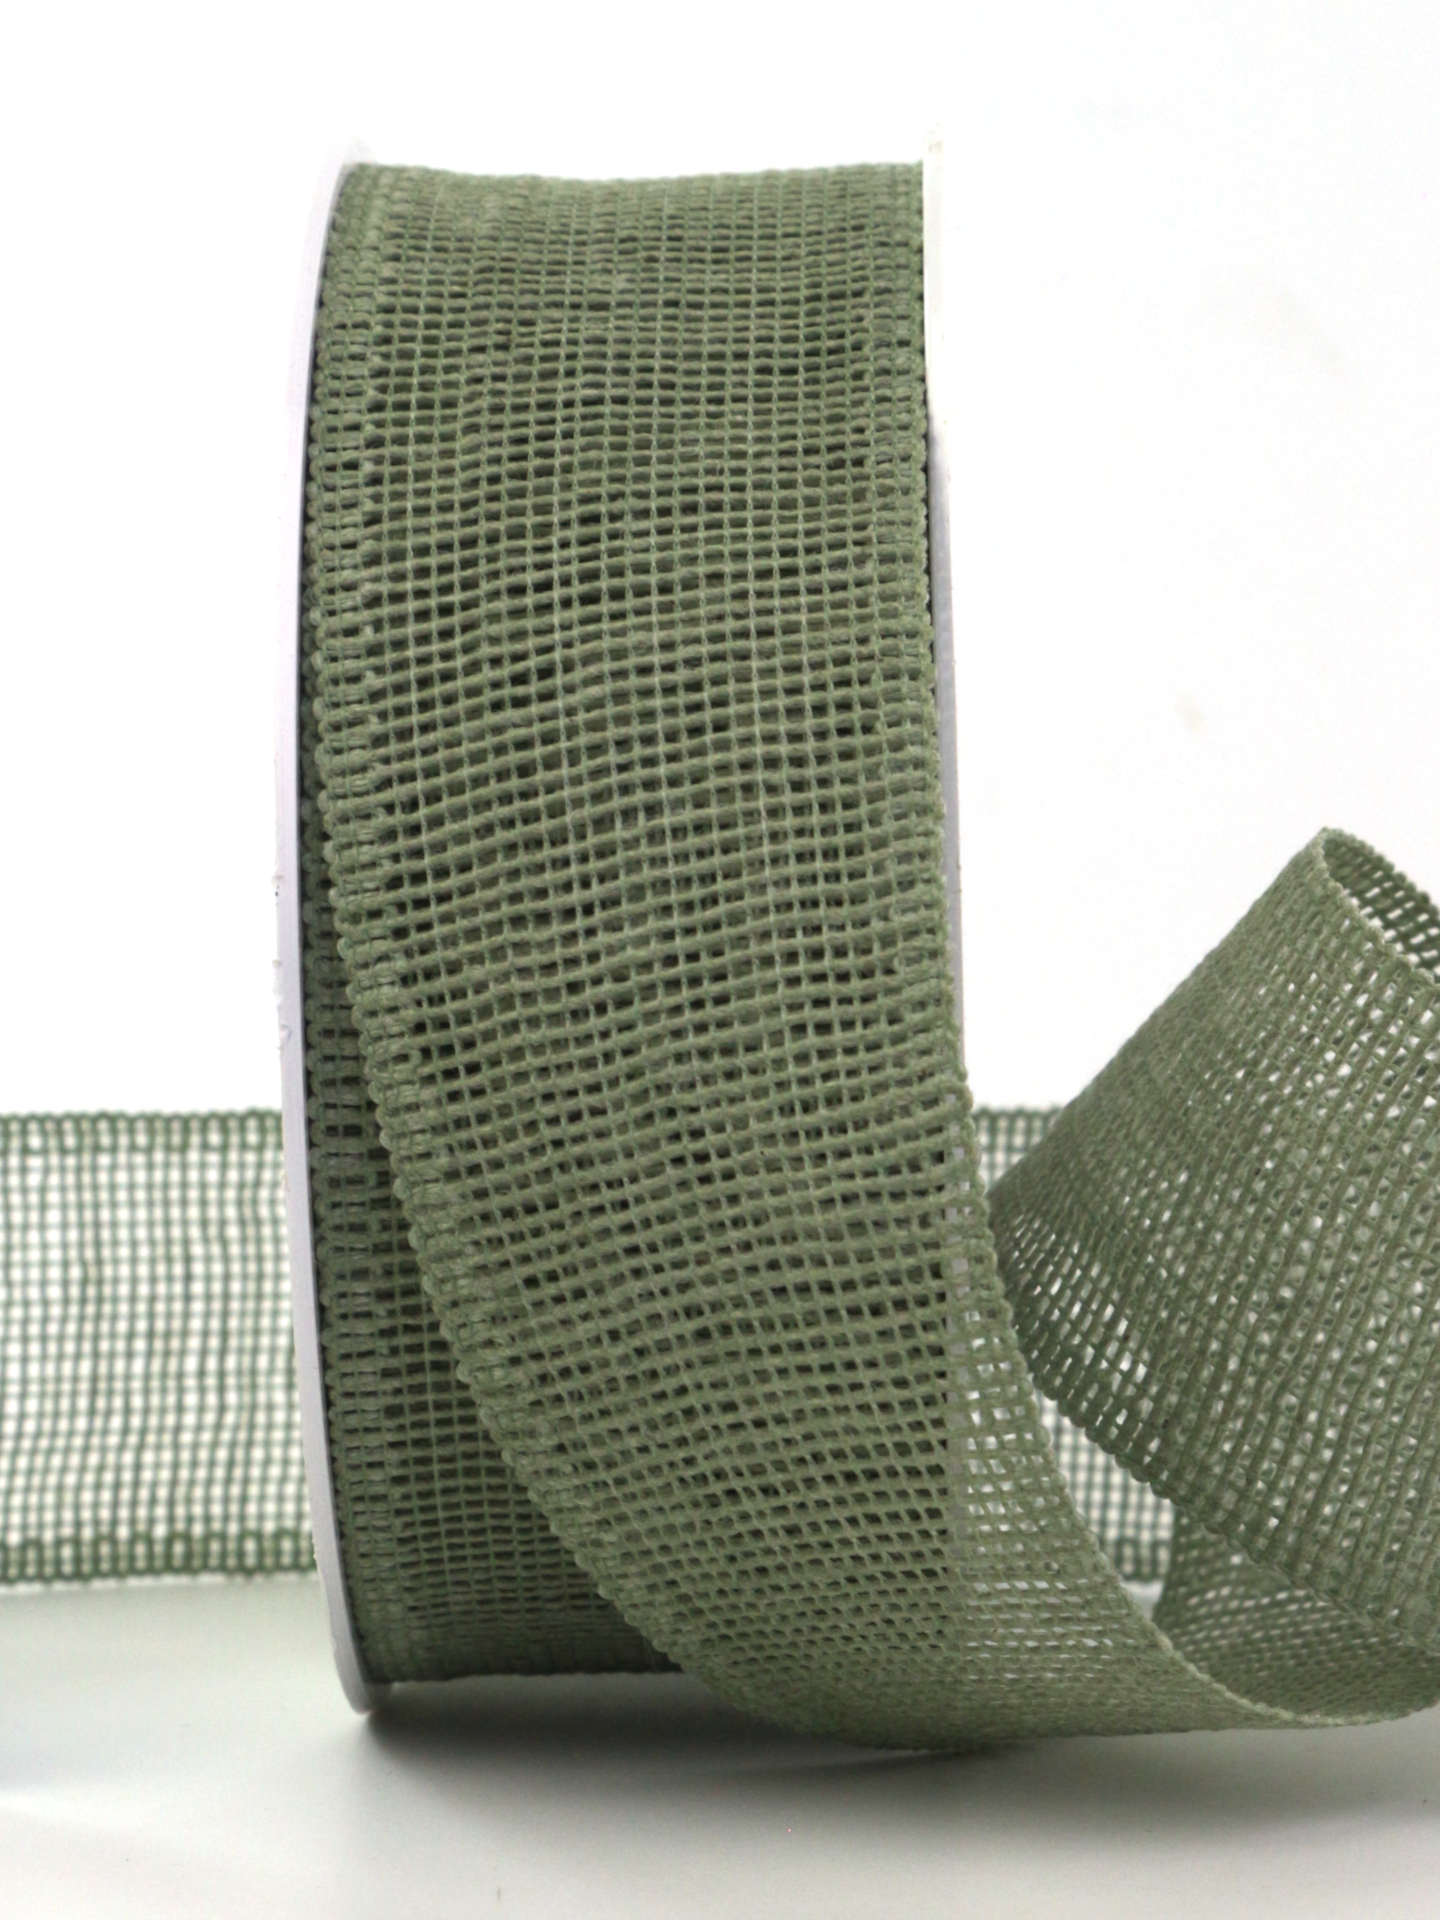 Feines Gitterband, outdoor, olivgrün, 40 mm breit, 10 m Rolle - geschenkband, outdoor-bander, dekoband, netzband, andere-baender